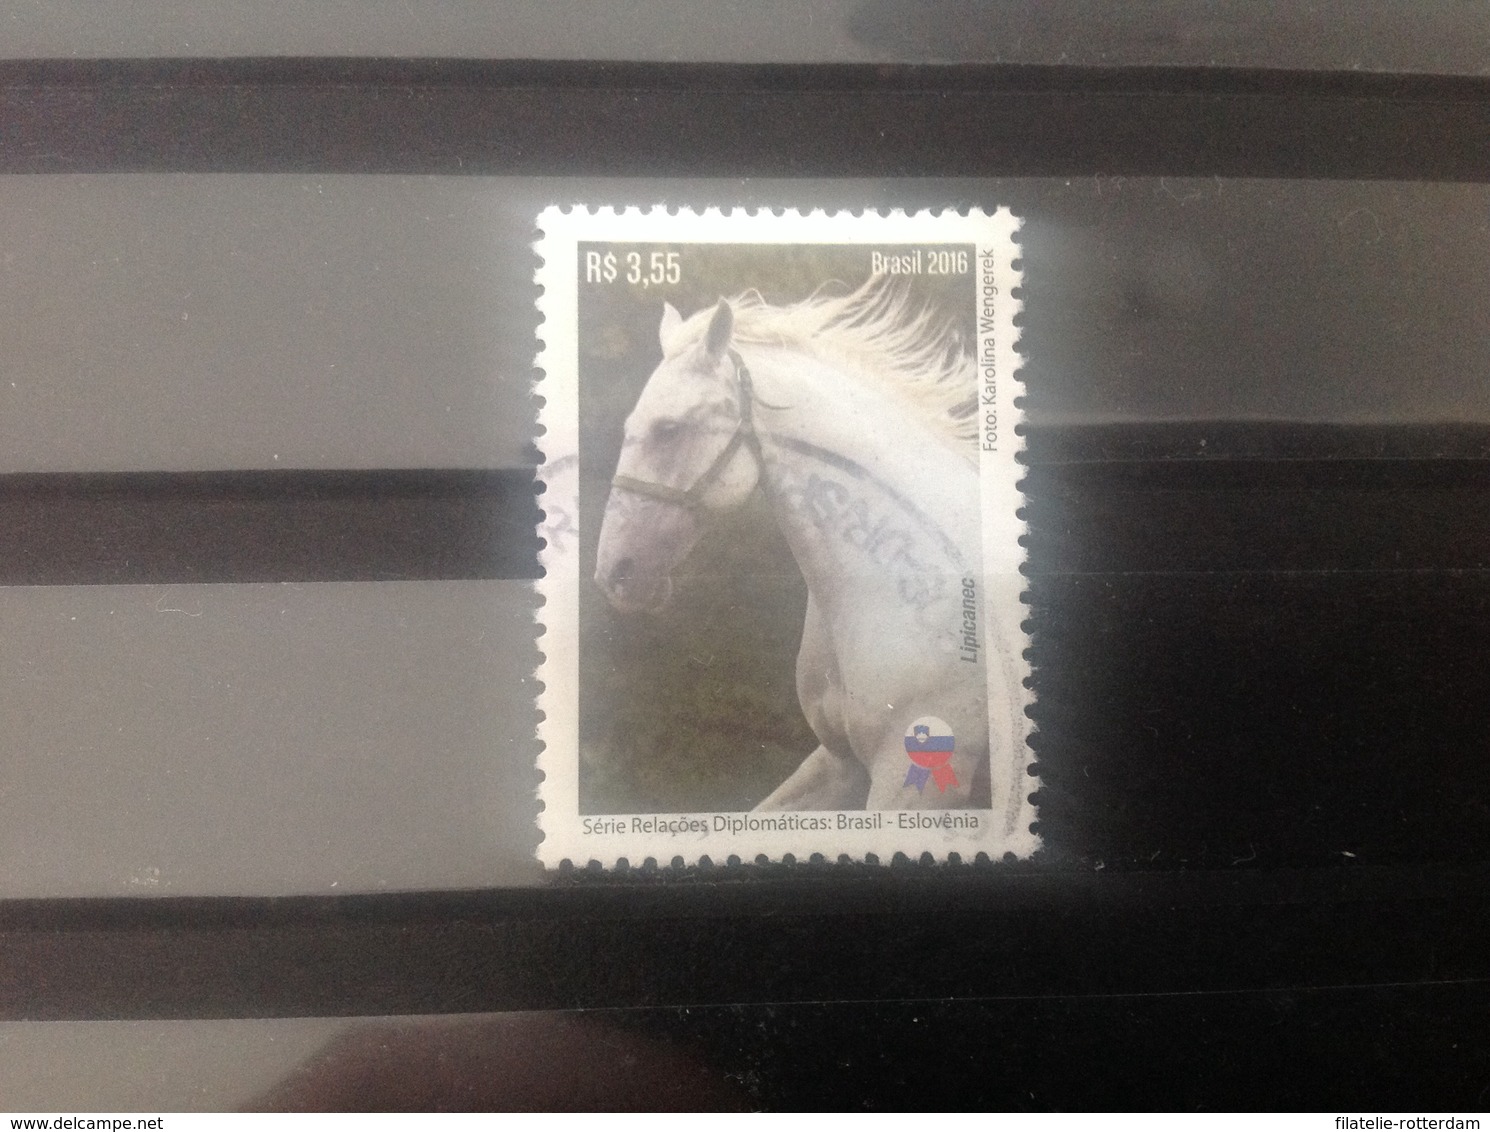 Brazilië / Brazil - Paarden (3.55) 2016 - Used Stamps